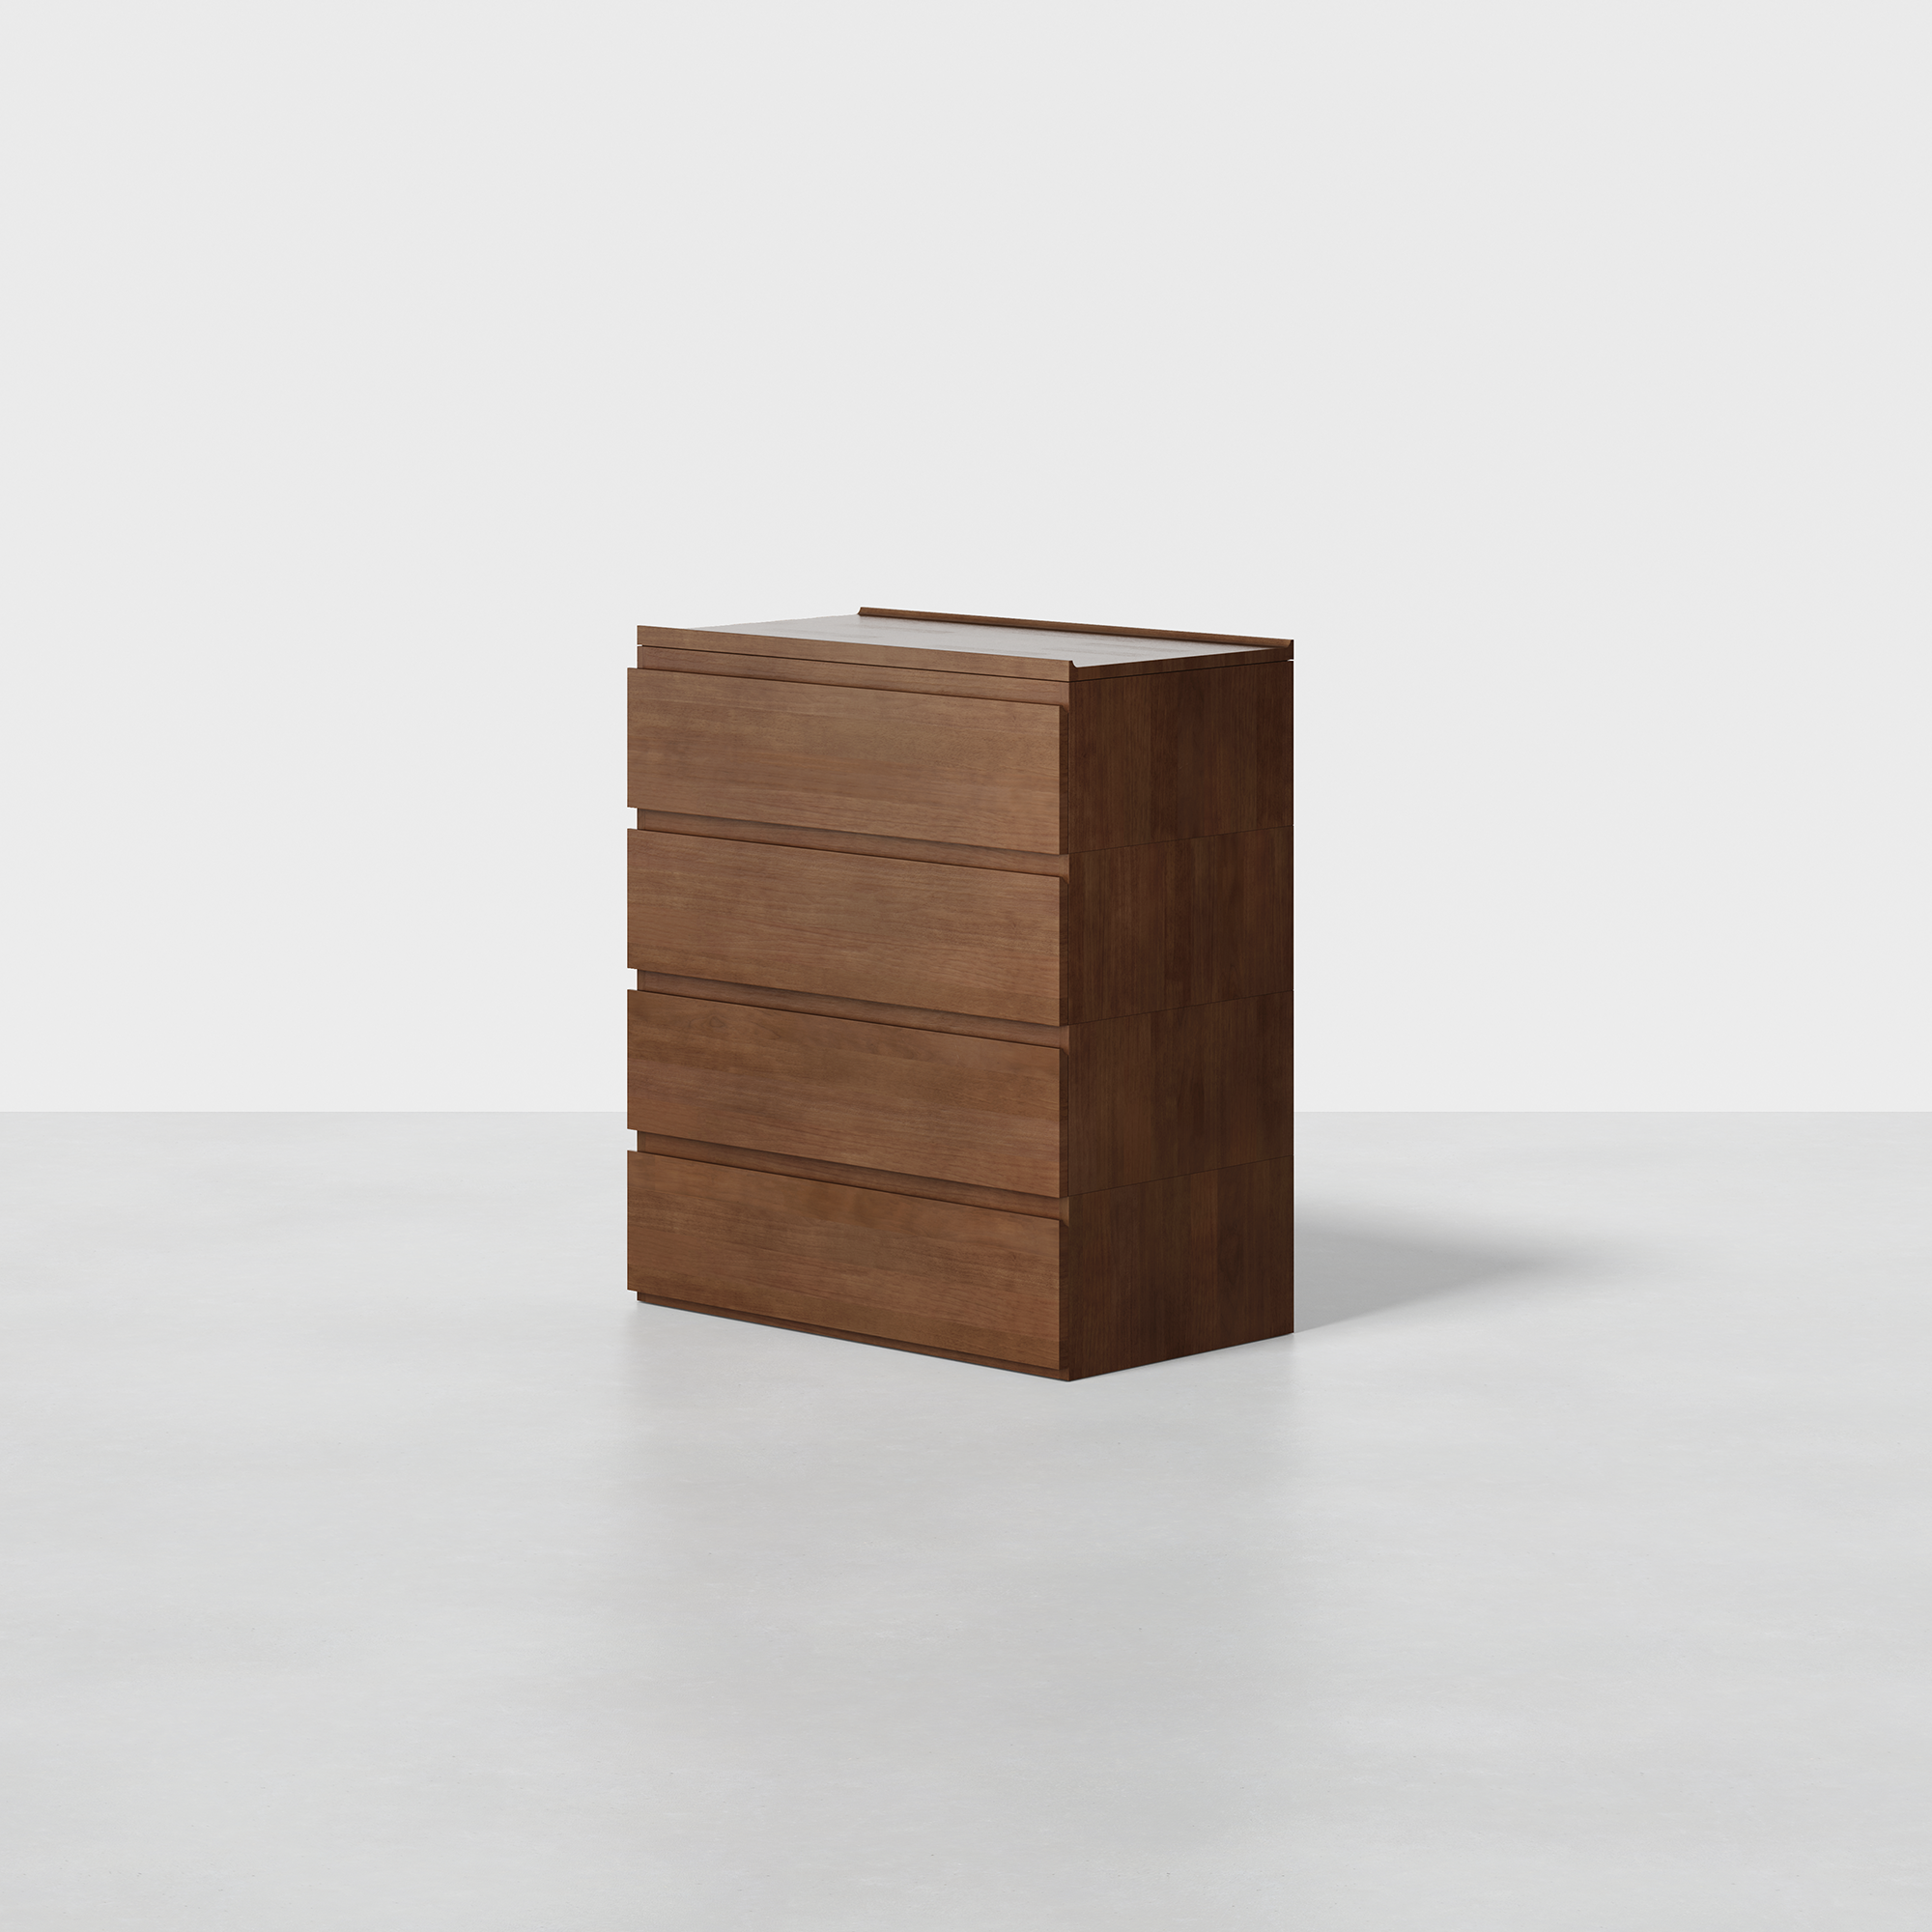 PDP Image: The Dresser (4x1 - Walnut) - Render - Angled